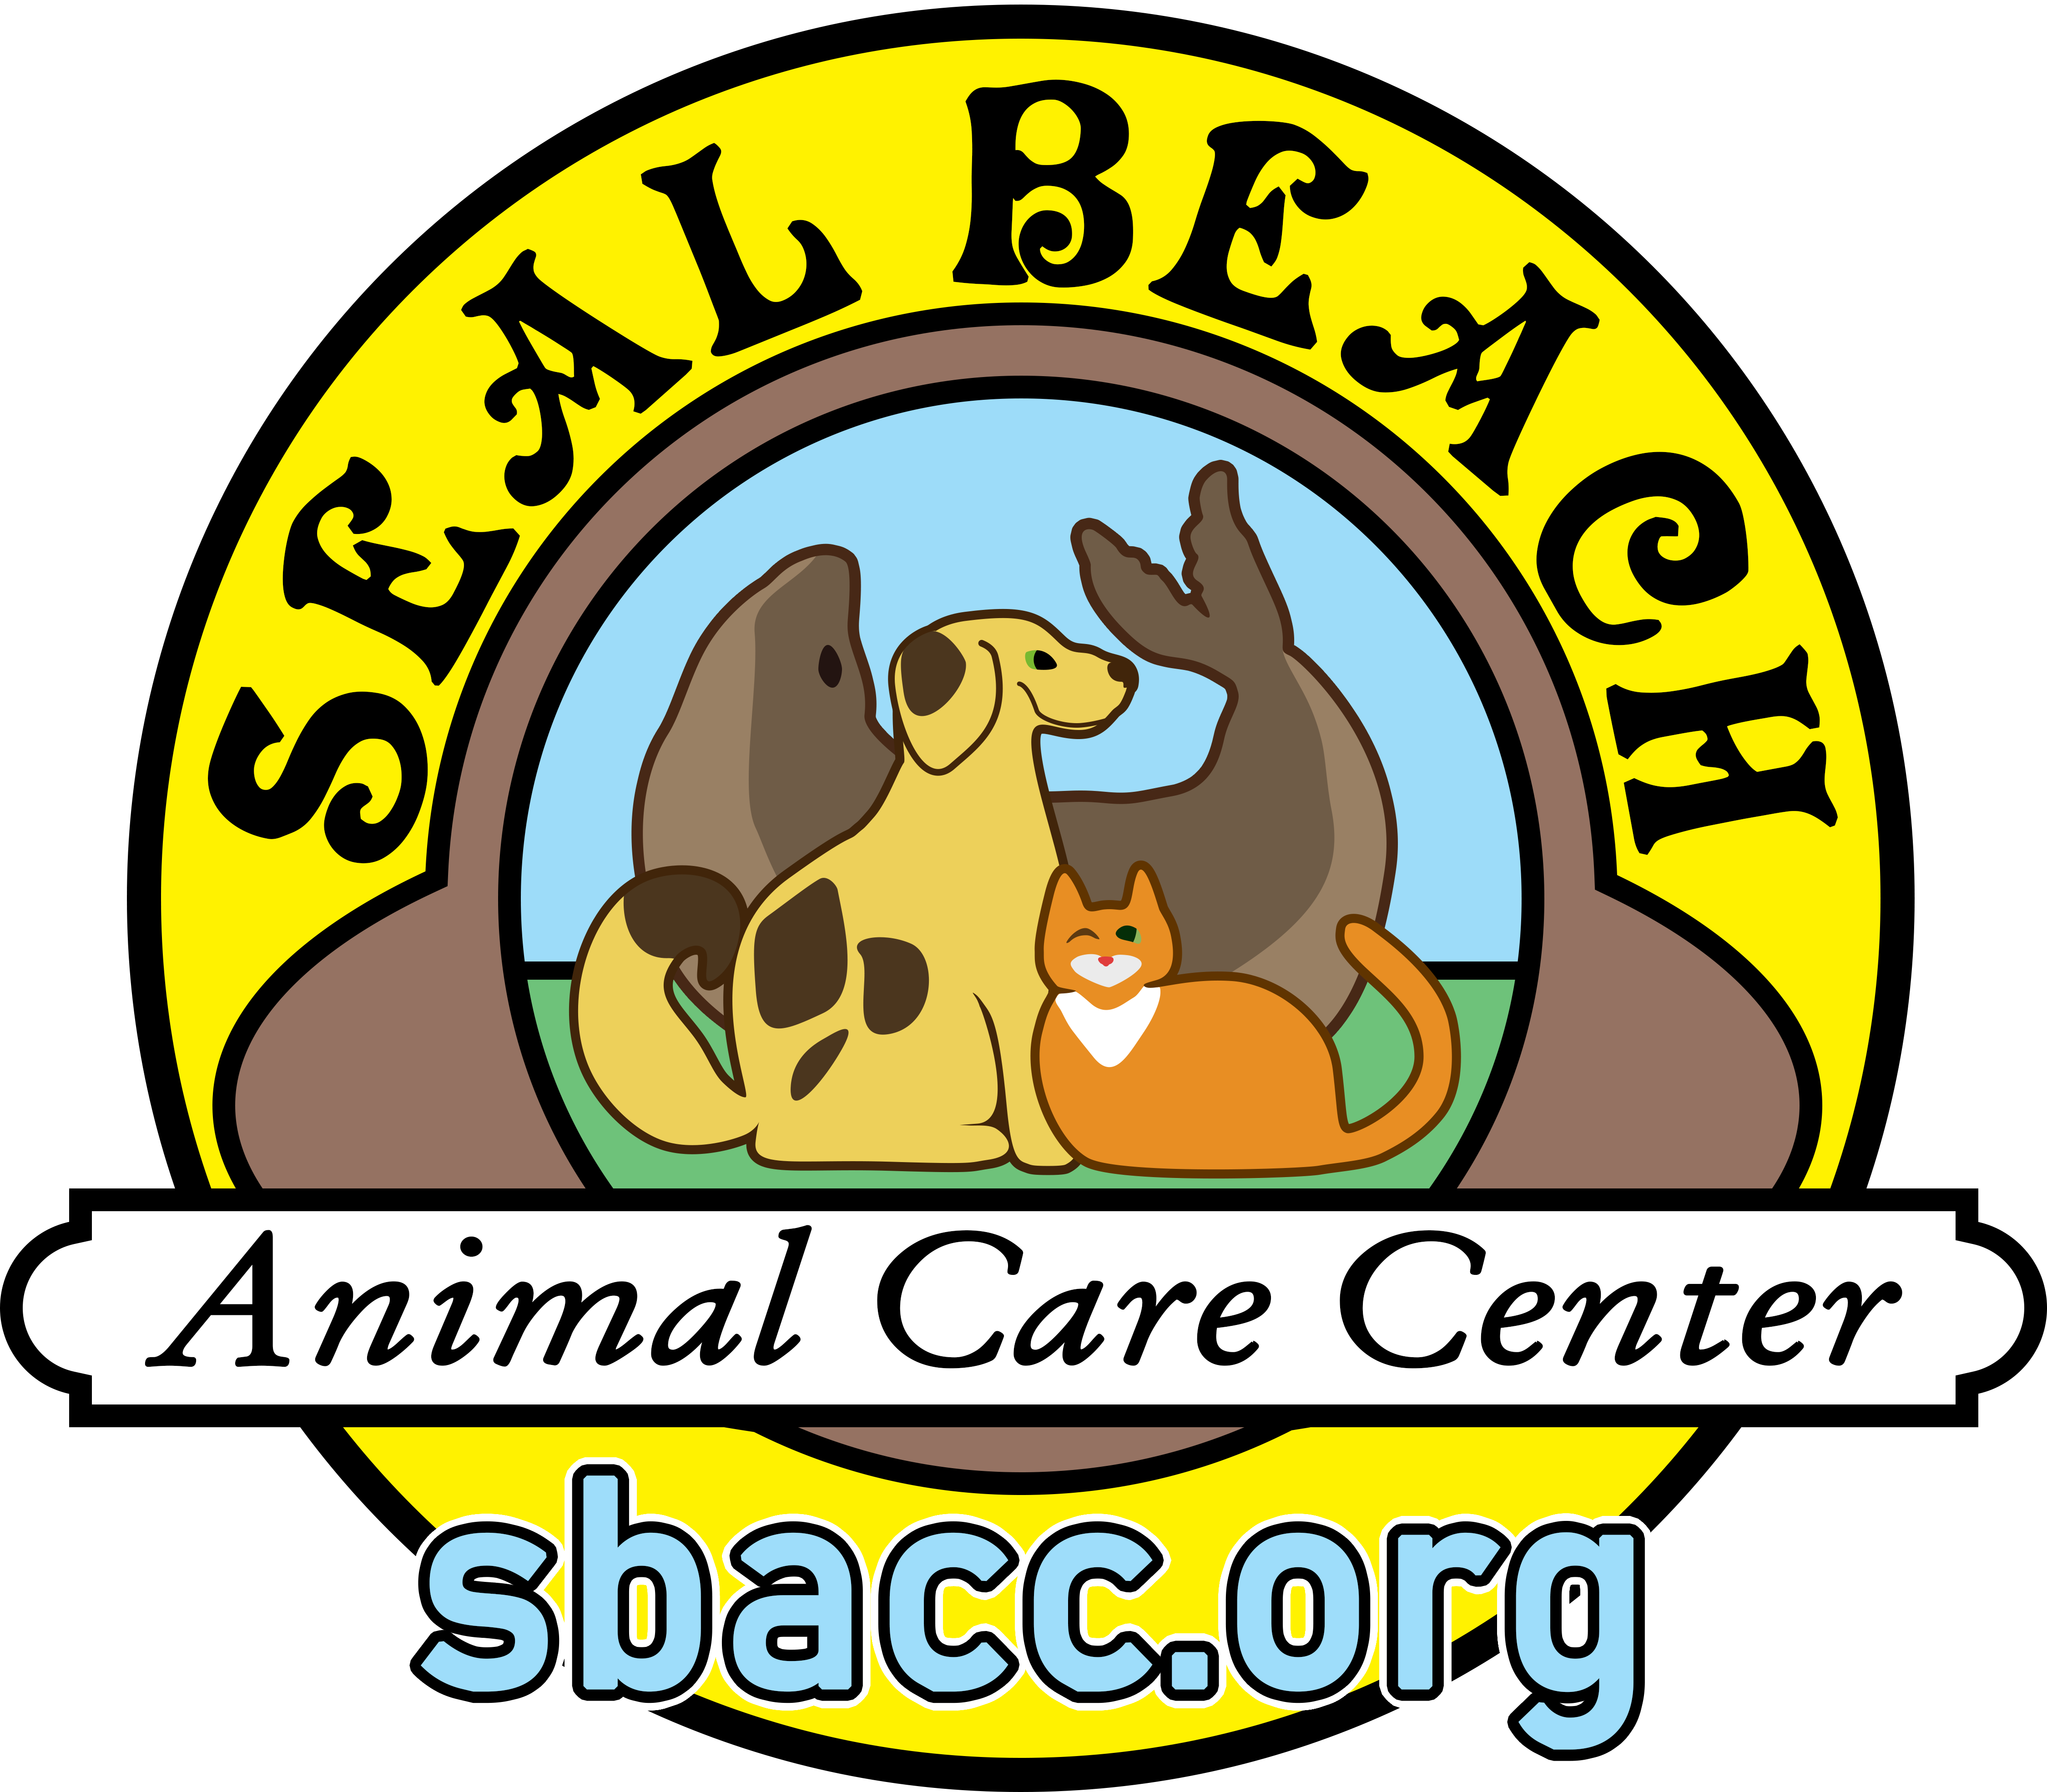 Seal Beach Animal Care Center